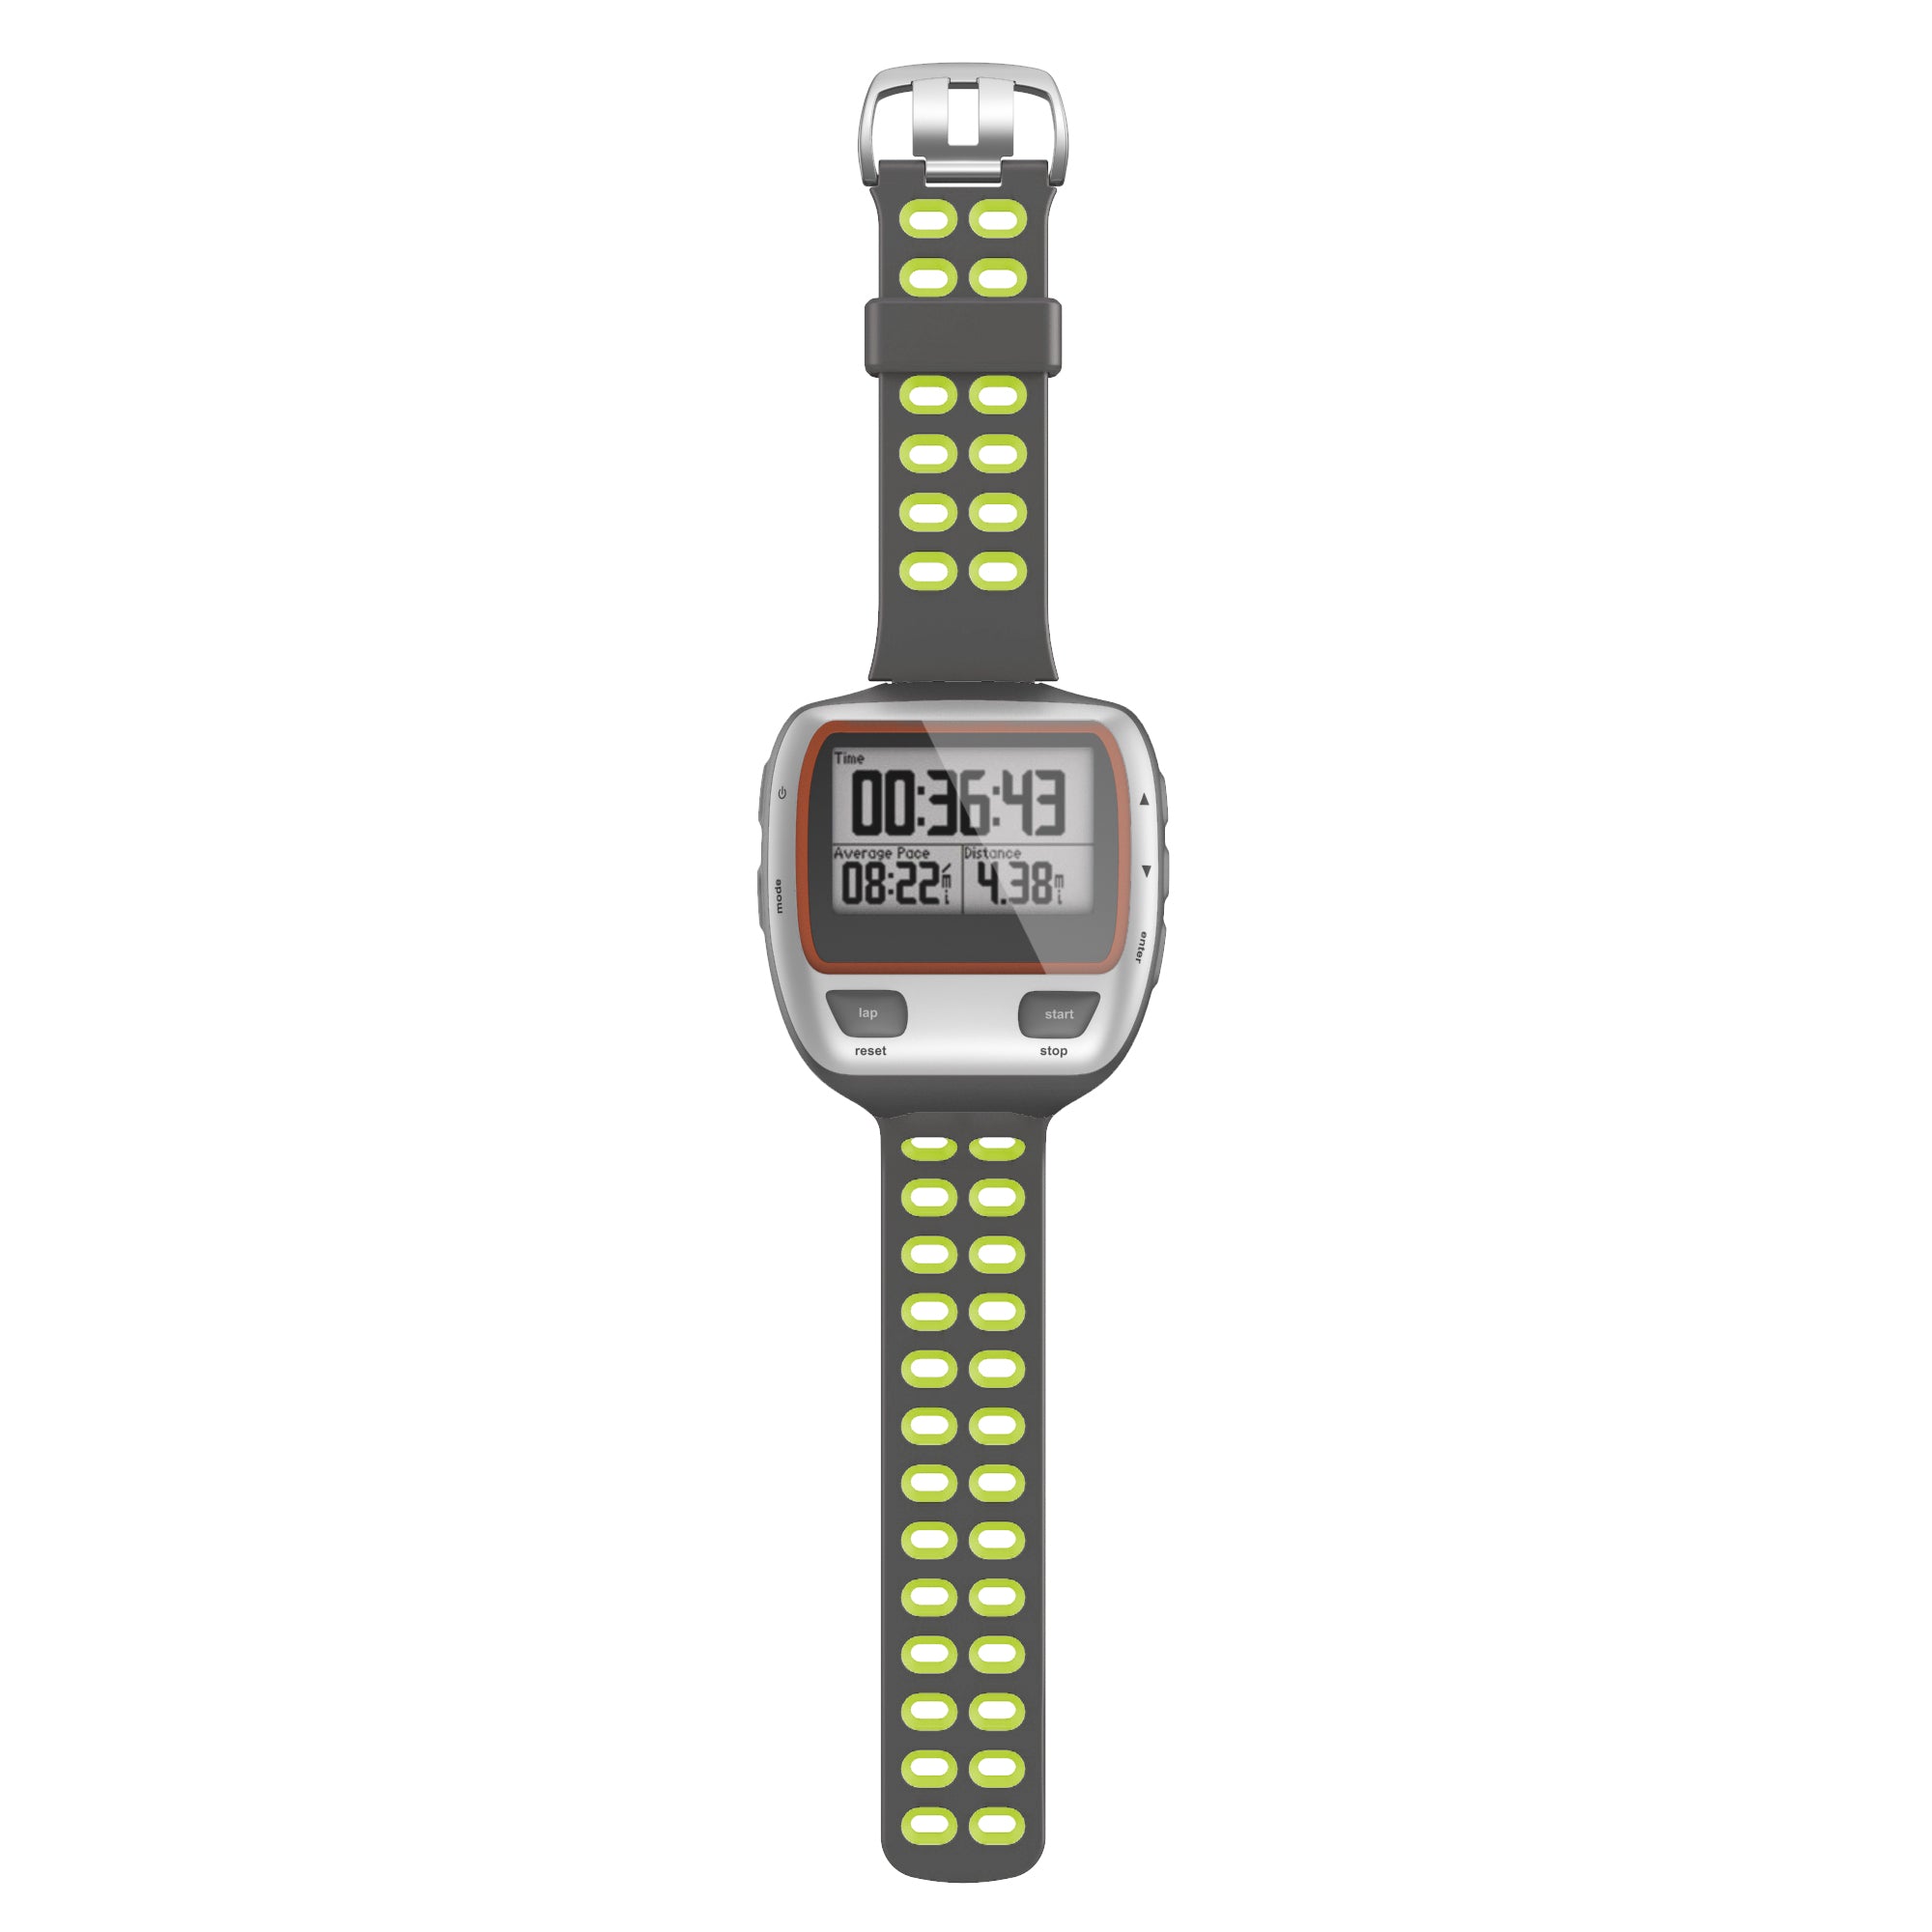 Double Color Silicone Watchband Strap Belt Replacement for Garmin Forerunner 310XT Smart Watch - Dark Grey / Green